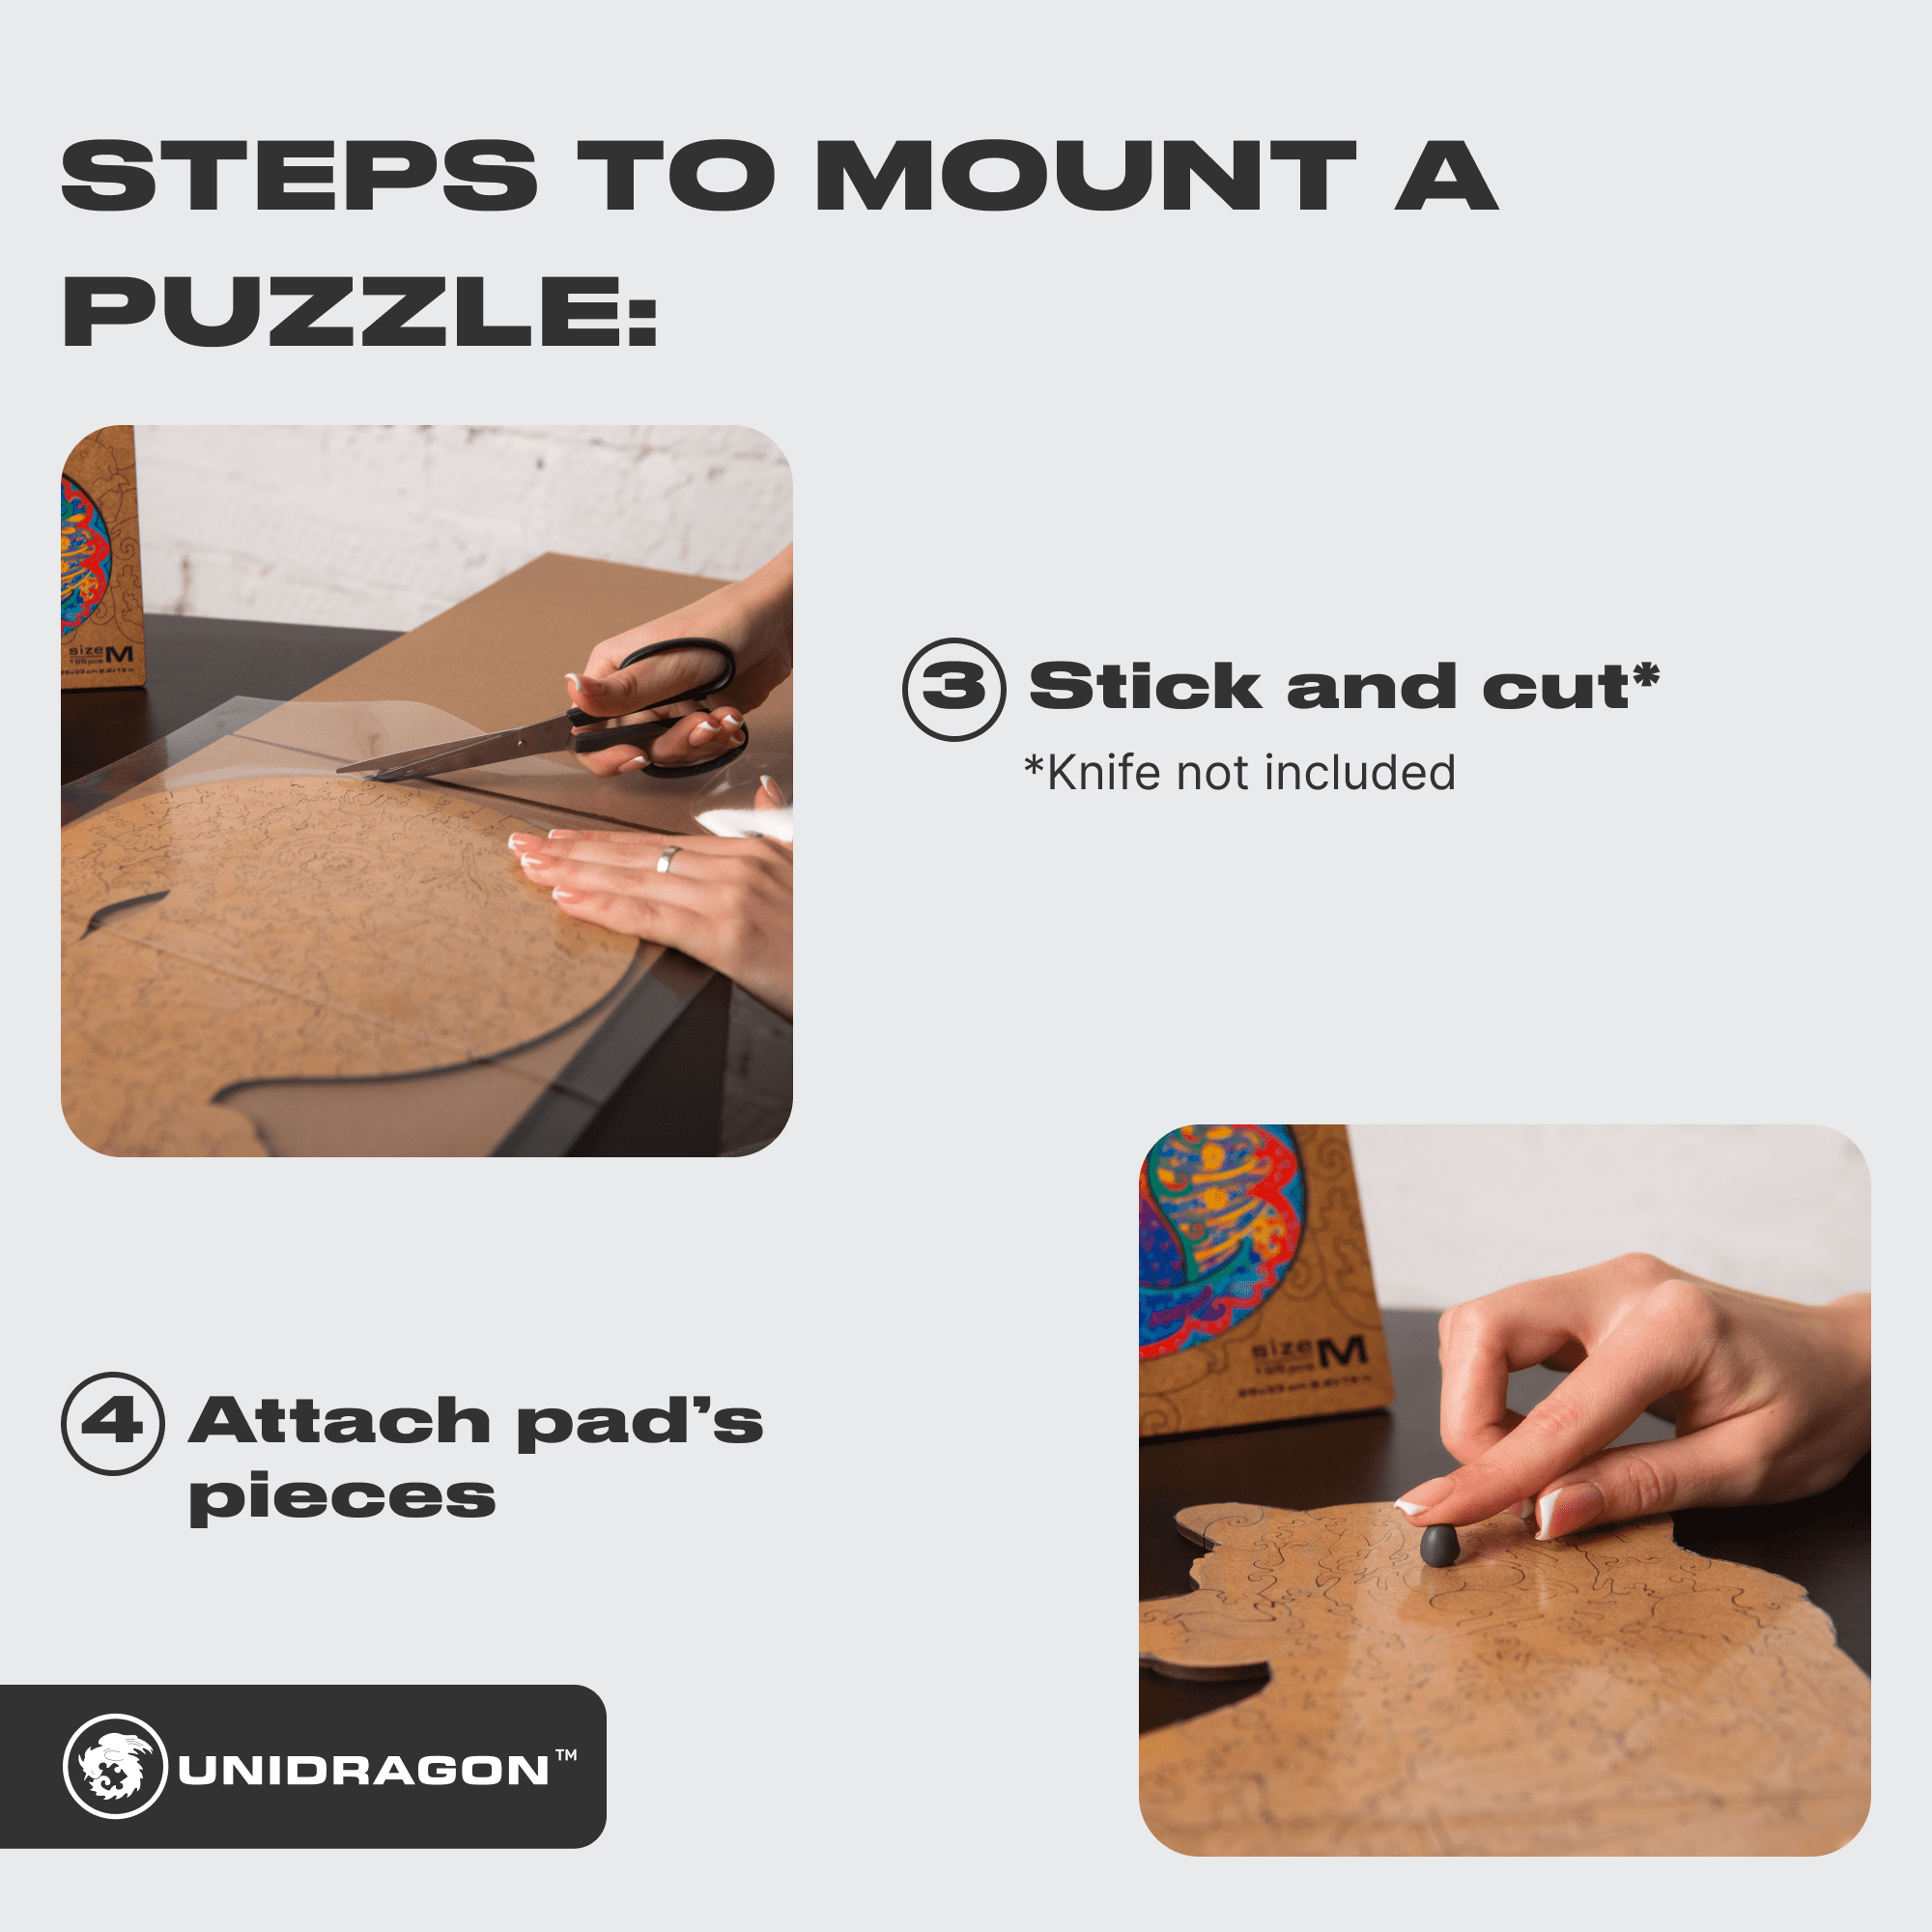 Unidragon Puzzle Set for mounting puzzles